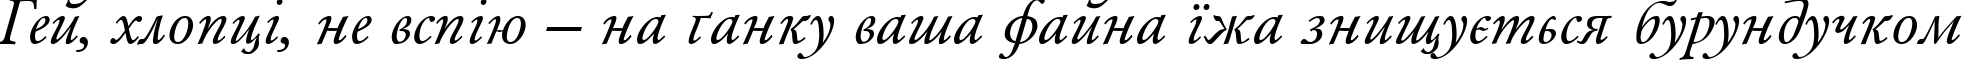 Пример написания шрифтом AZGaramondCTT-Italic текста на украинском